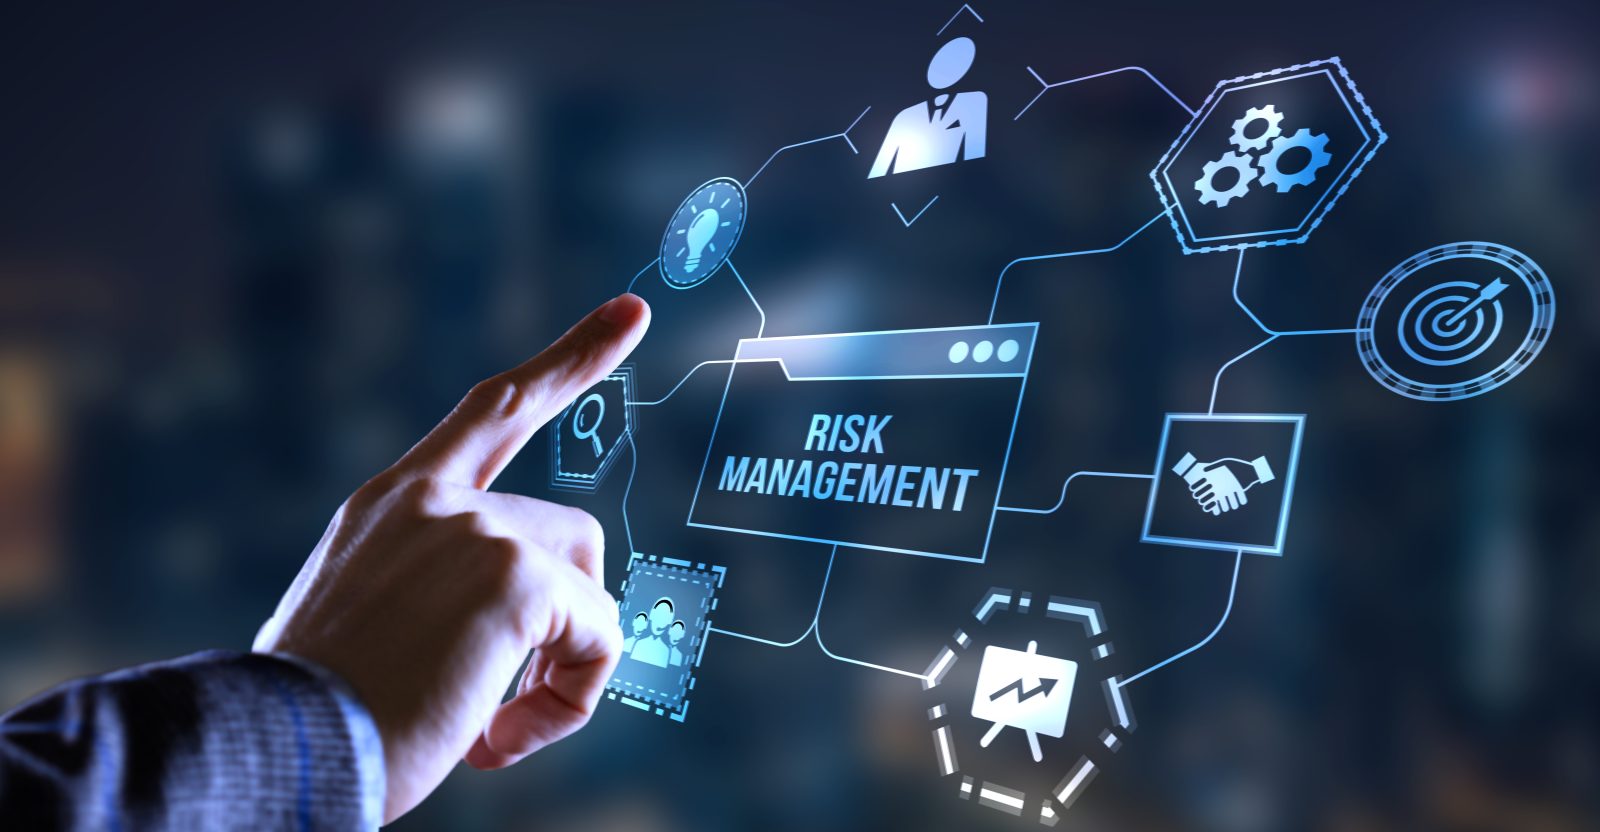 Department of Disaster Risk Management